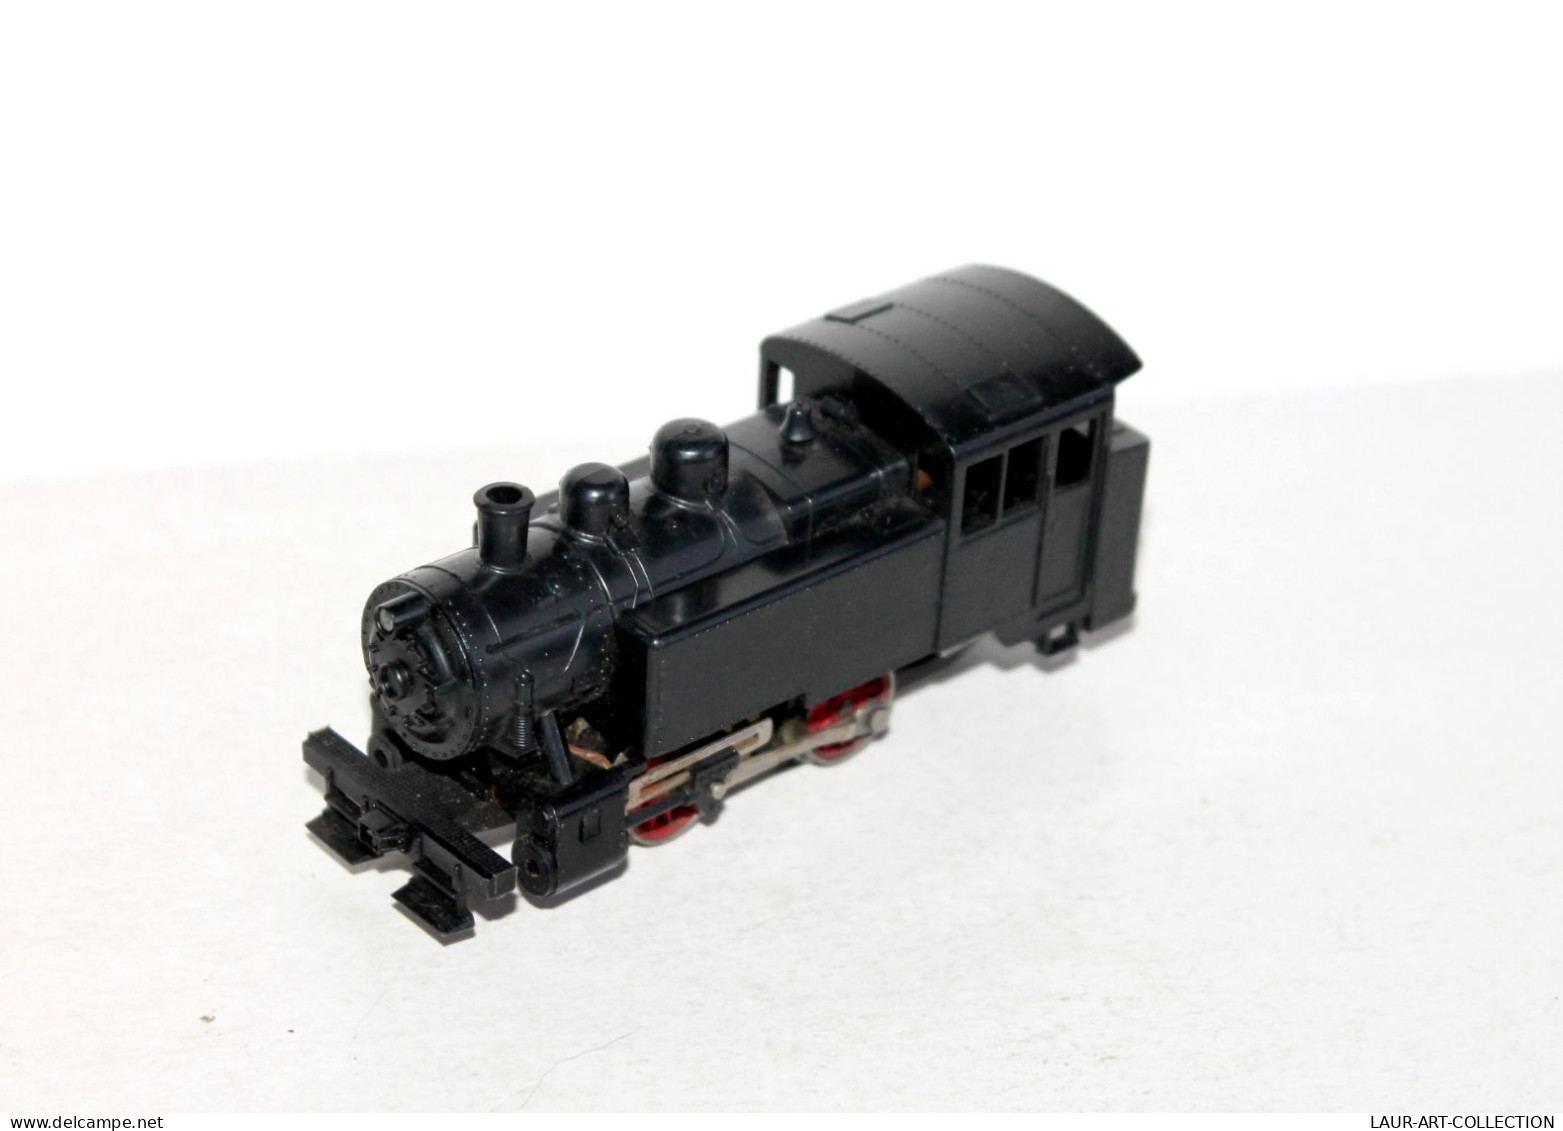 LIMA HO - RARE LOCOMOTIVE A VAPEUR REF 020 3005, ANCIEN MODELE FERROVIAIRE TRAIN - MODELE FERROVIAIRE (2105.241) - Locomotives